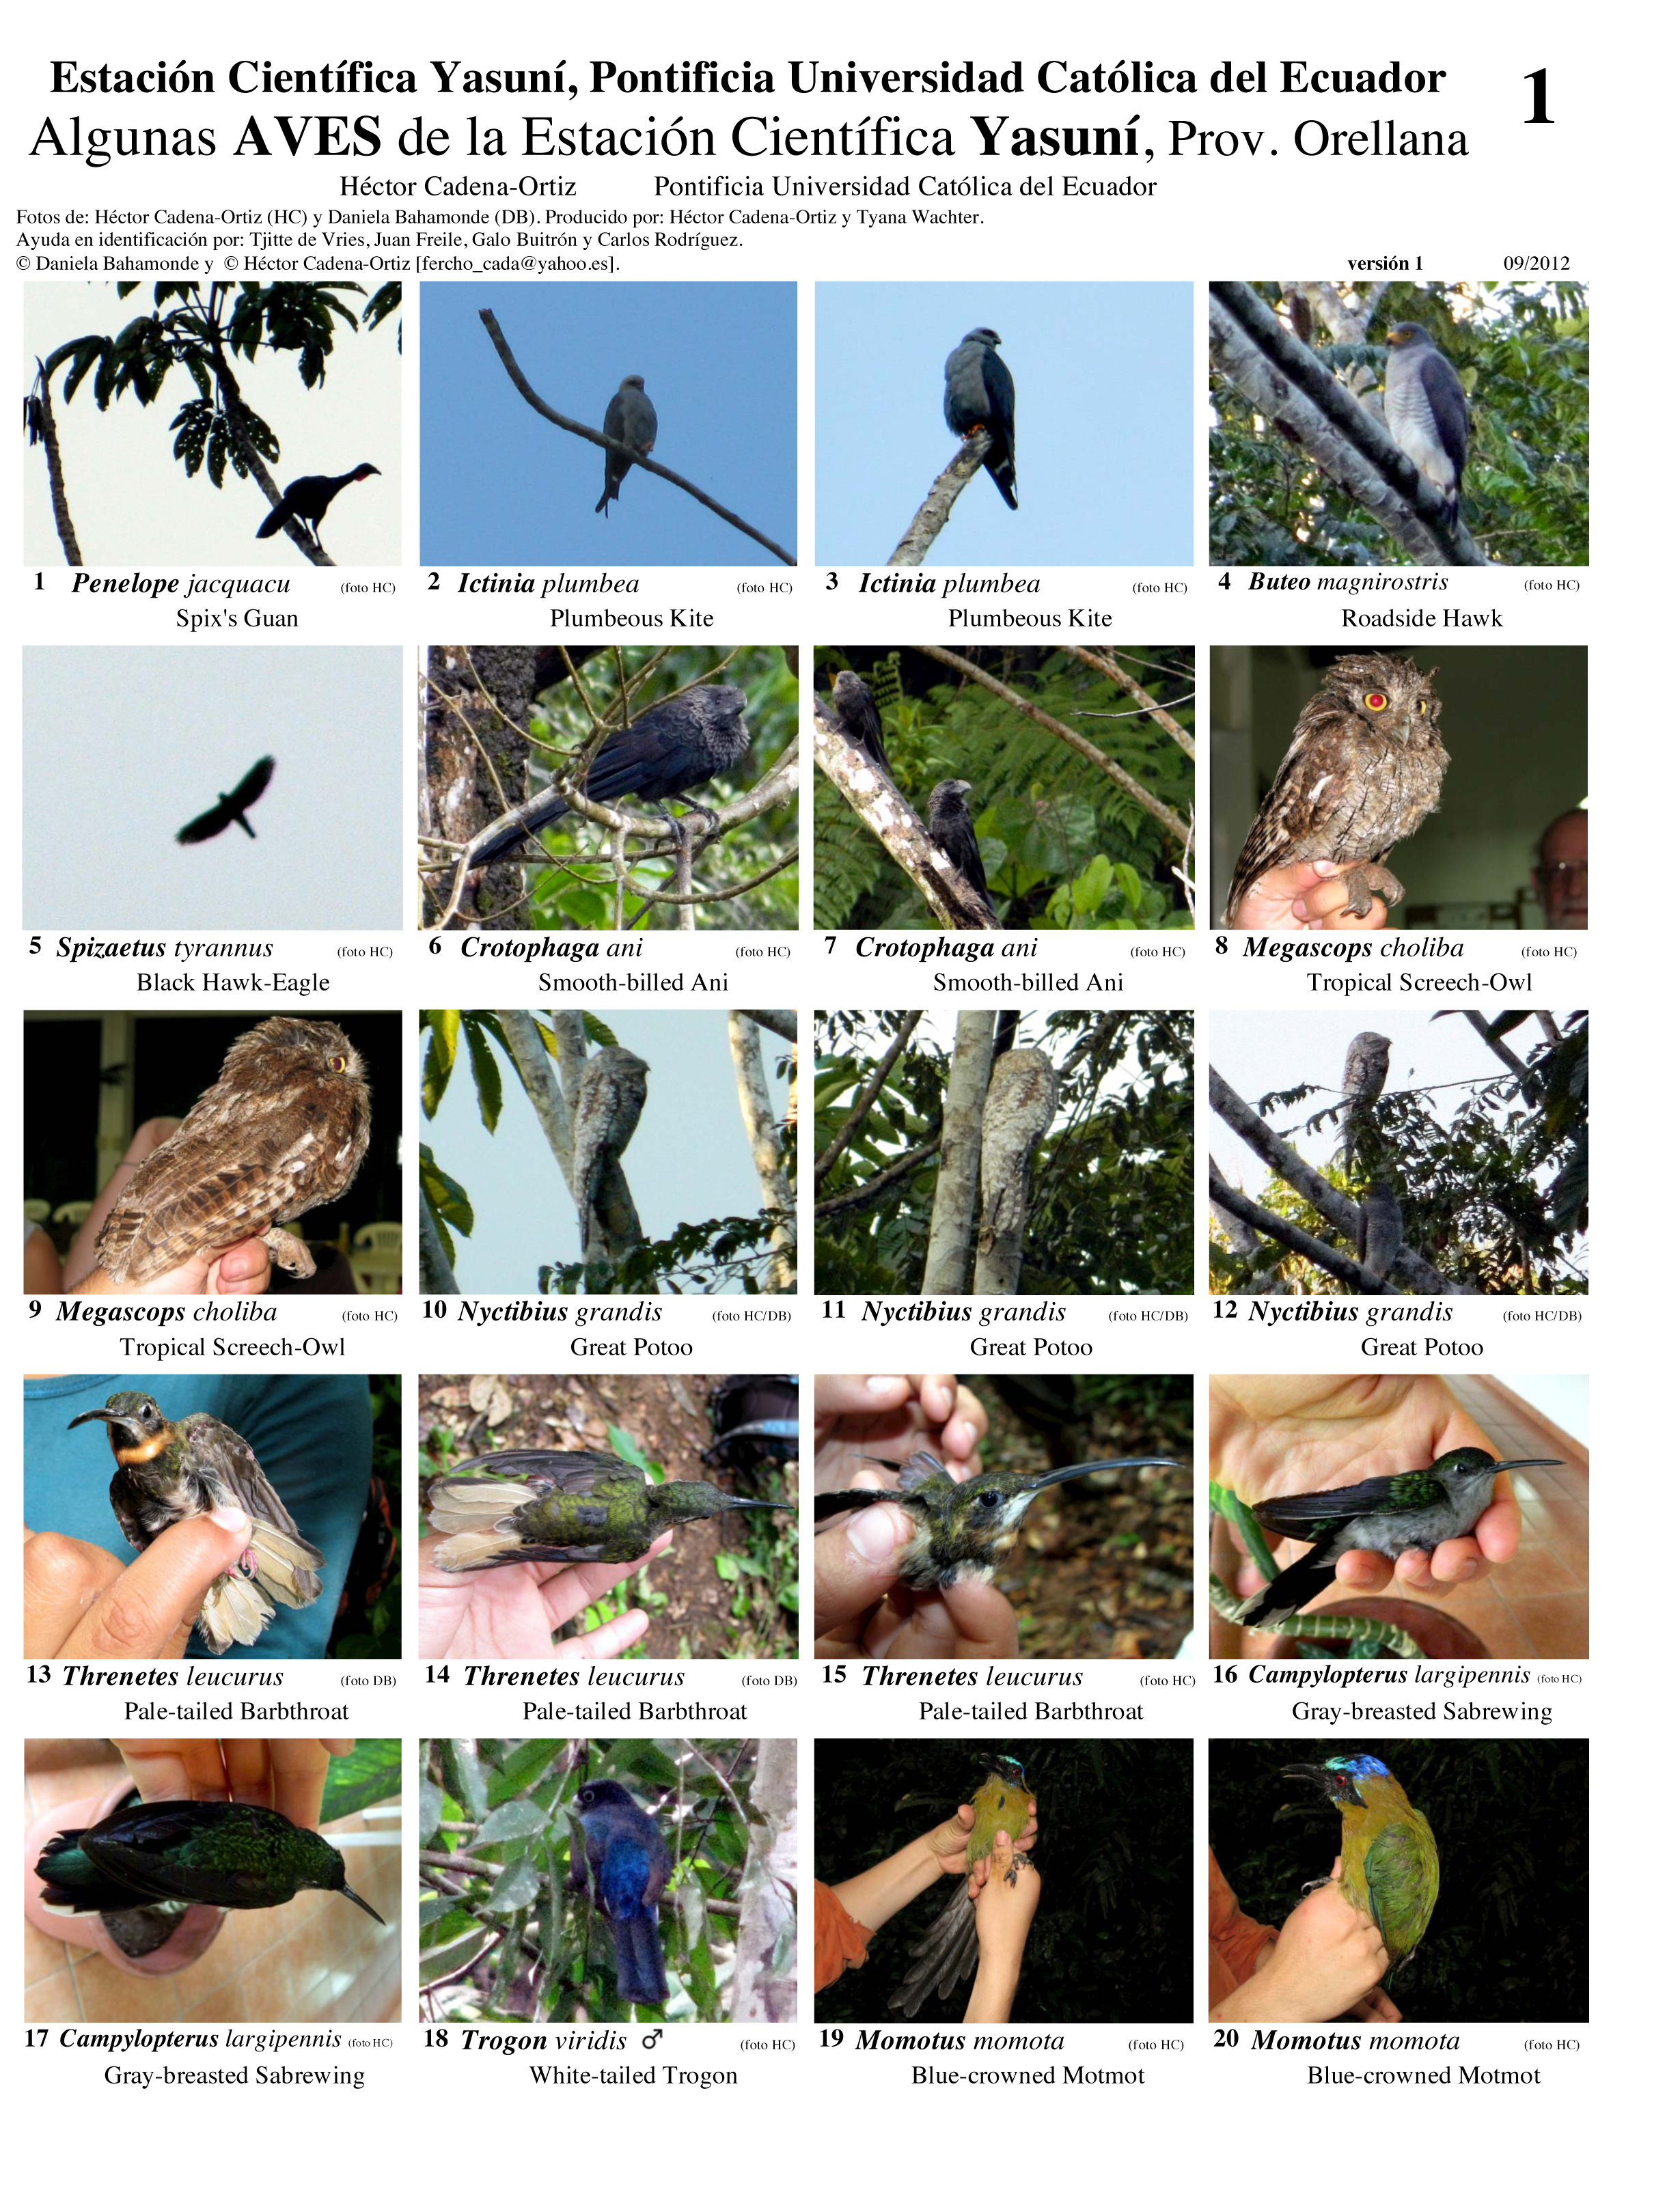 Orellana Province -- Birds of Yasuní Scientific Station